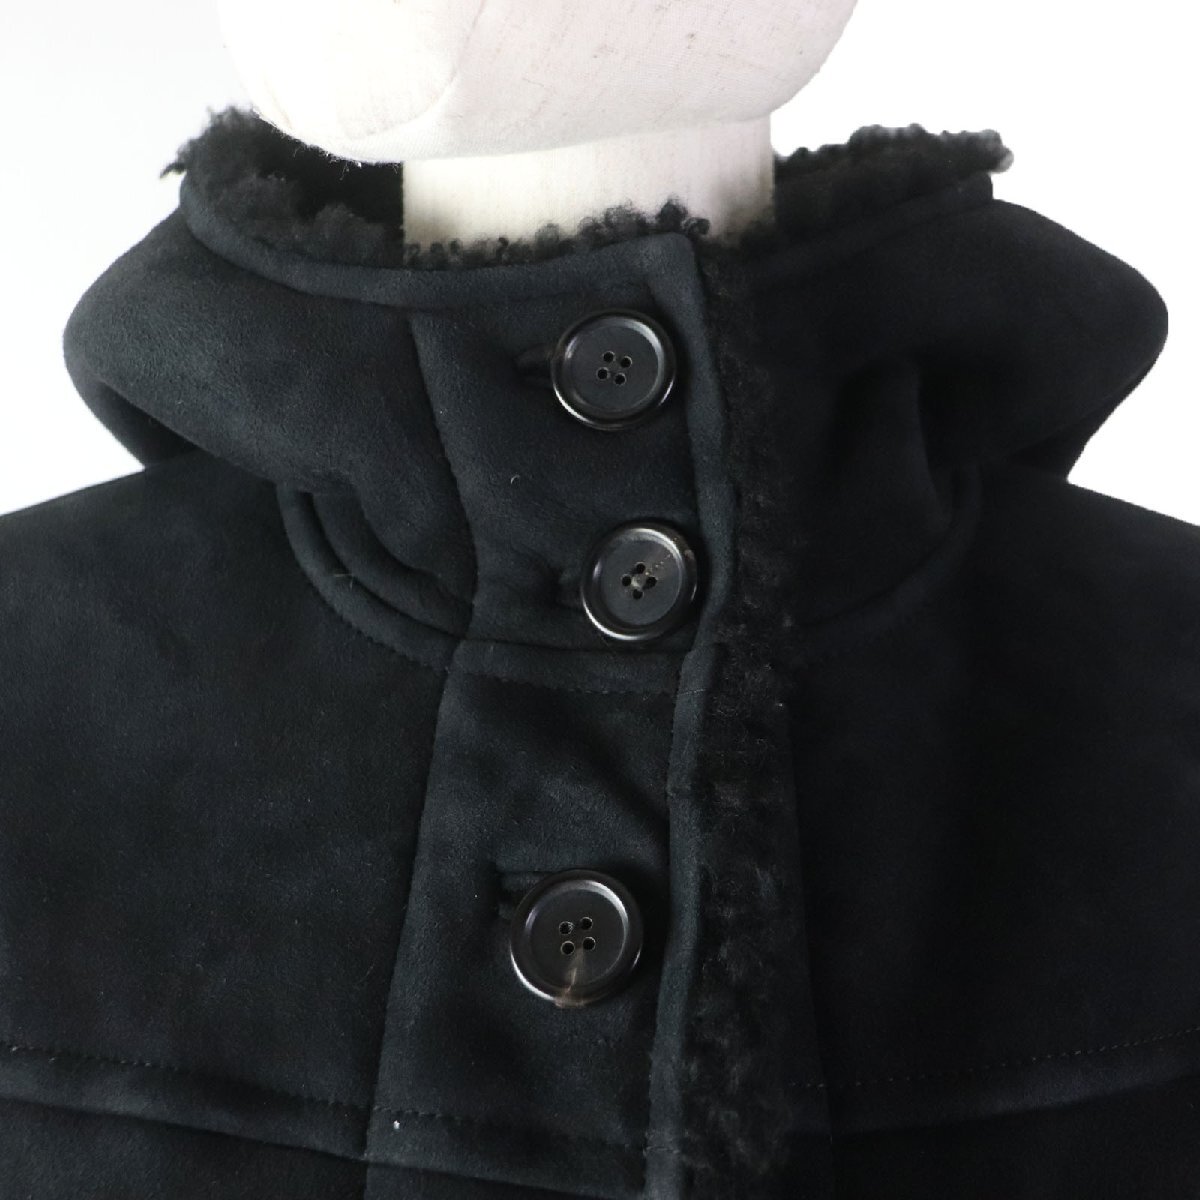  superior article *PRADA Prada 2017 year made belt * with a hood mouton coat black 38 Italy made regular goods lady's 